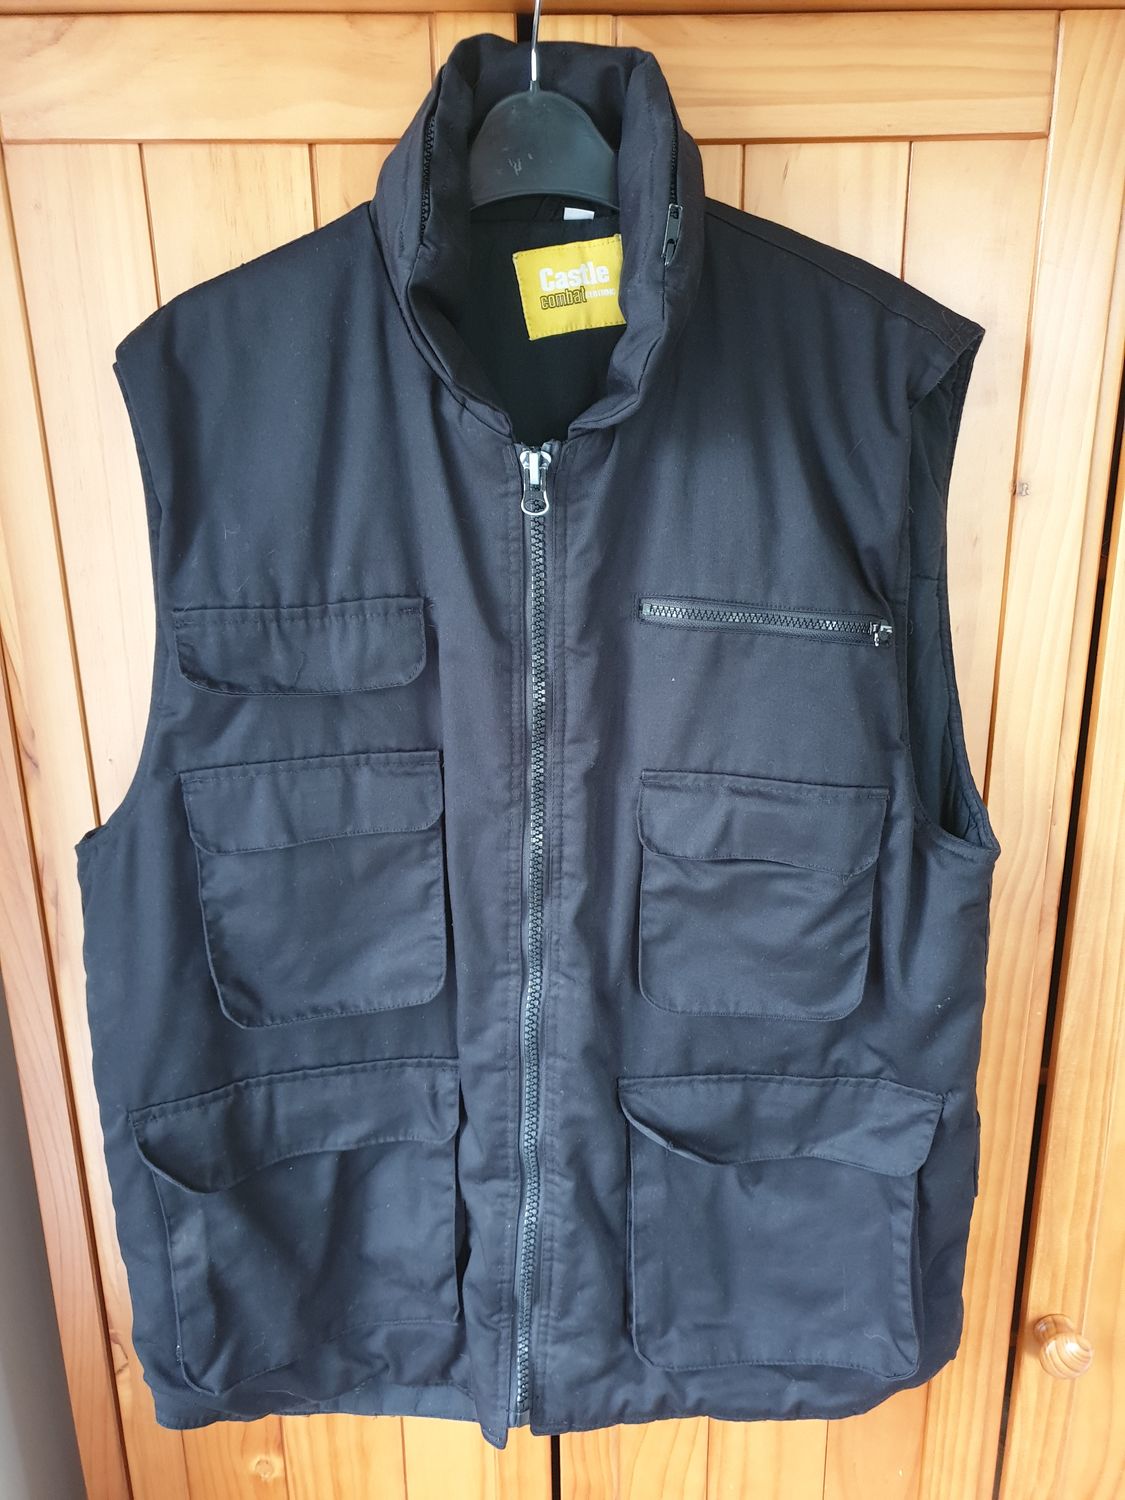 Black padded vest / flak jacket style - Gear - Airsoft Forums UK